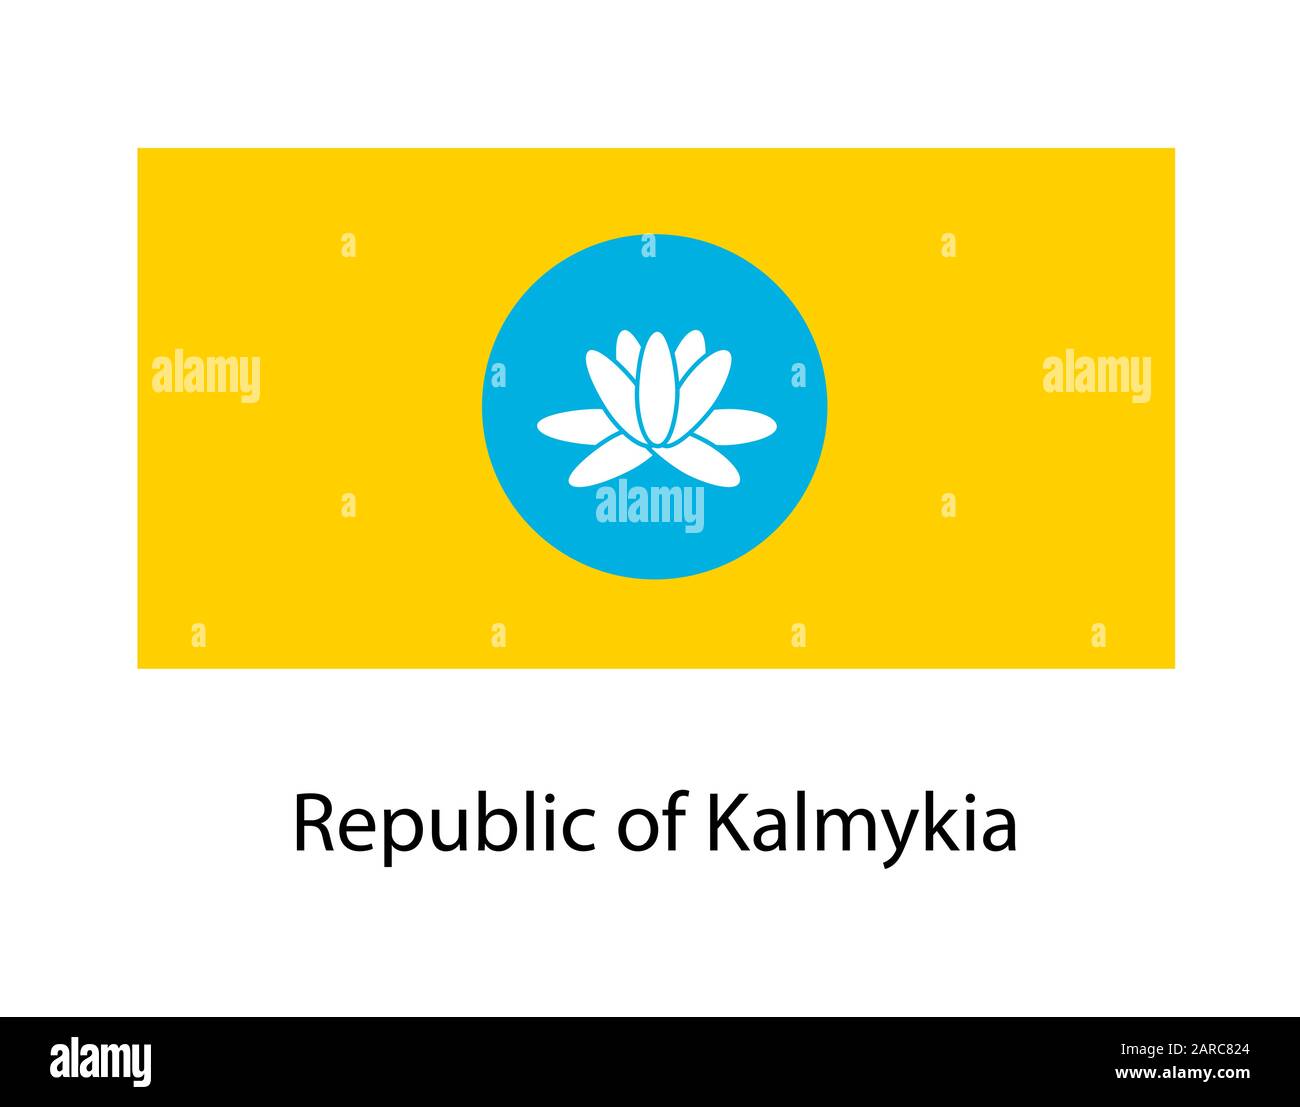 Flag of Kalmykia republics of Russia. Stock Vector